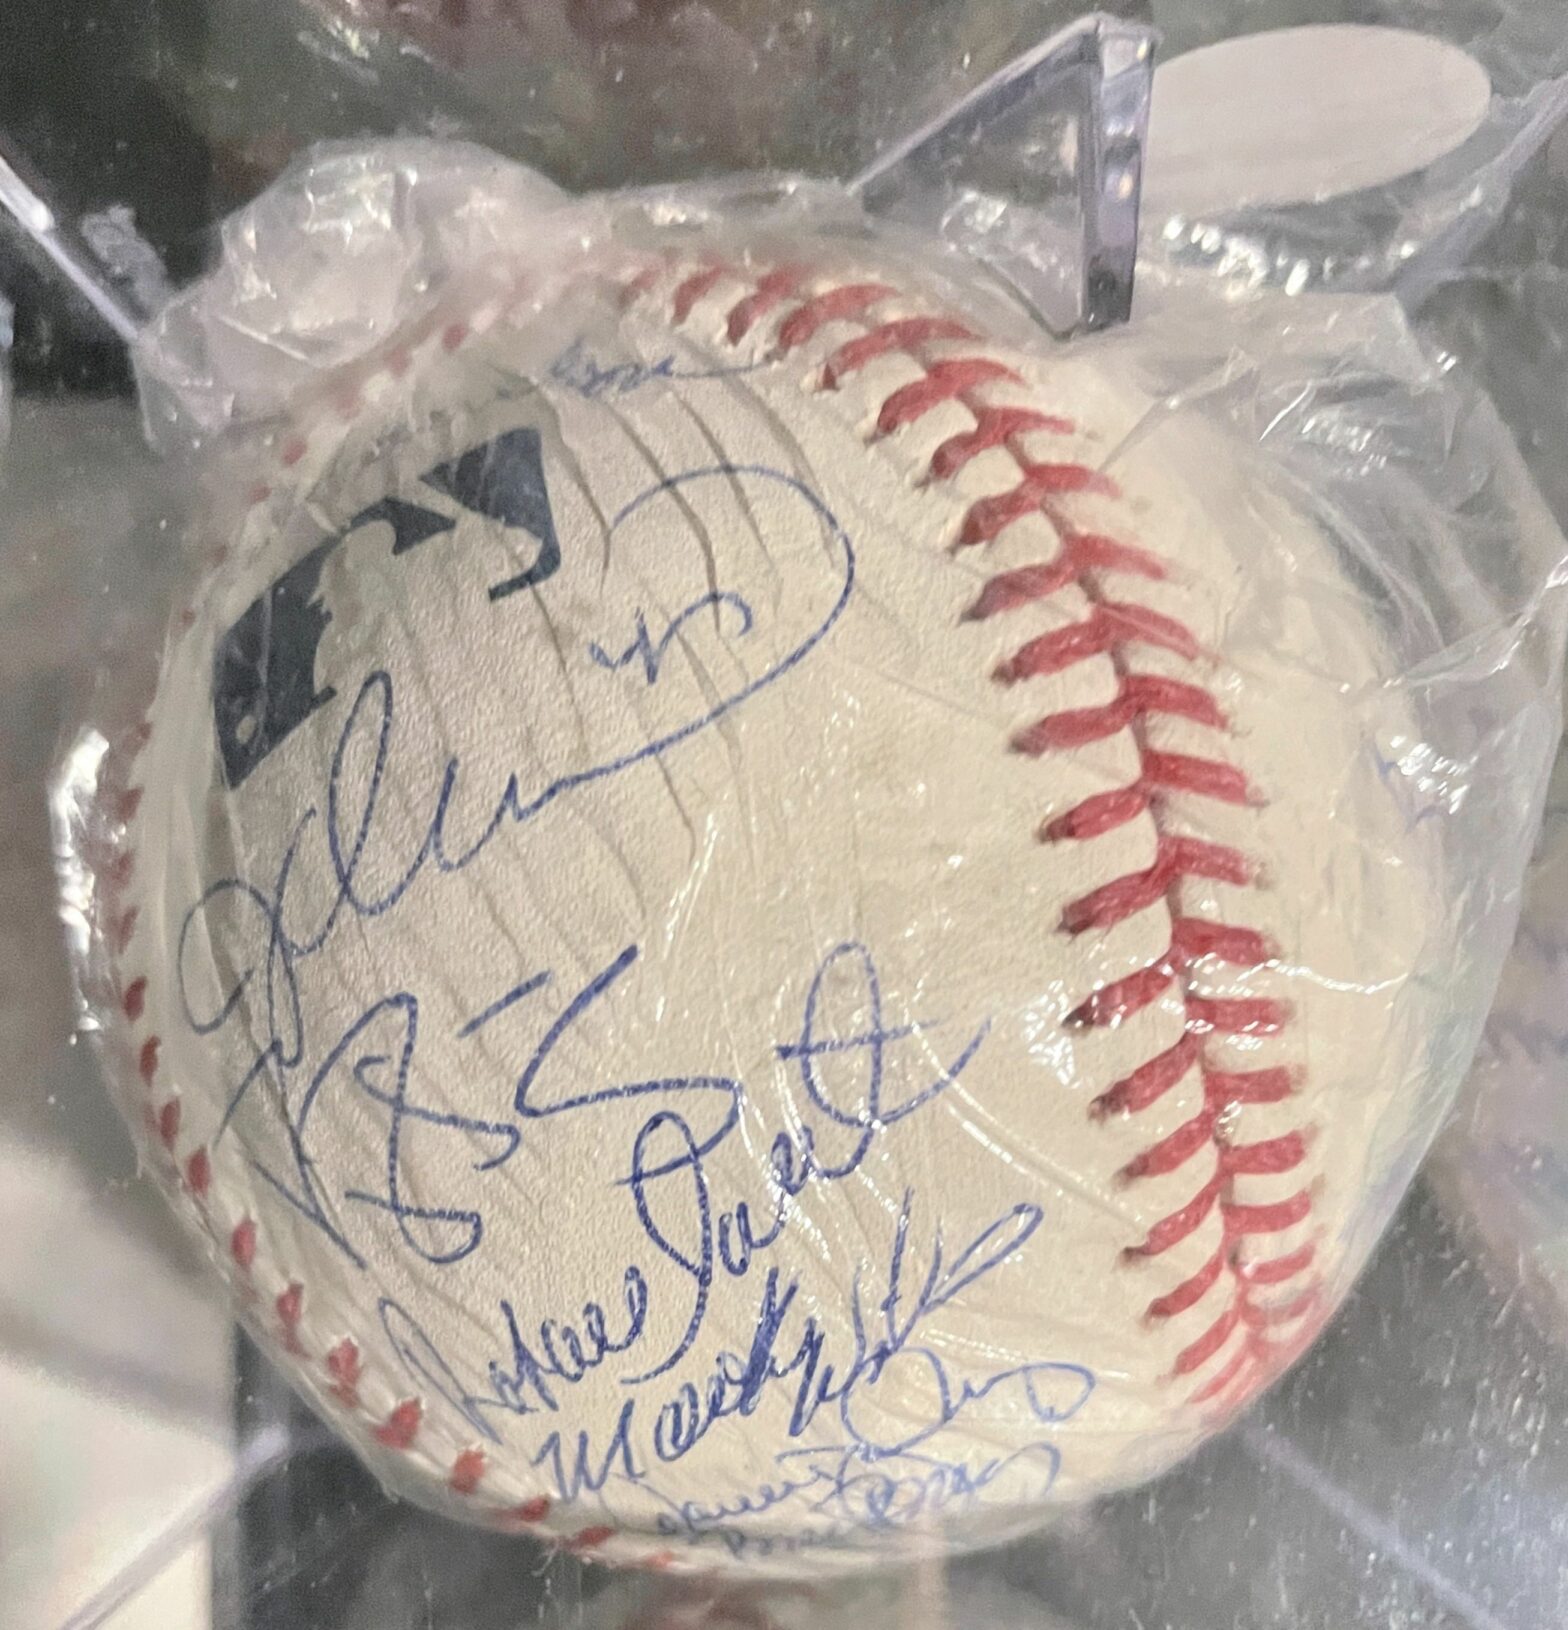 1986 World Series Champions New York Mets Team Signed Baseball (JSA LOA)